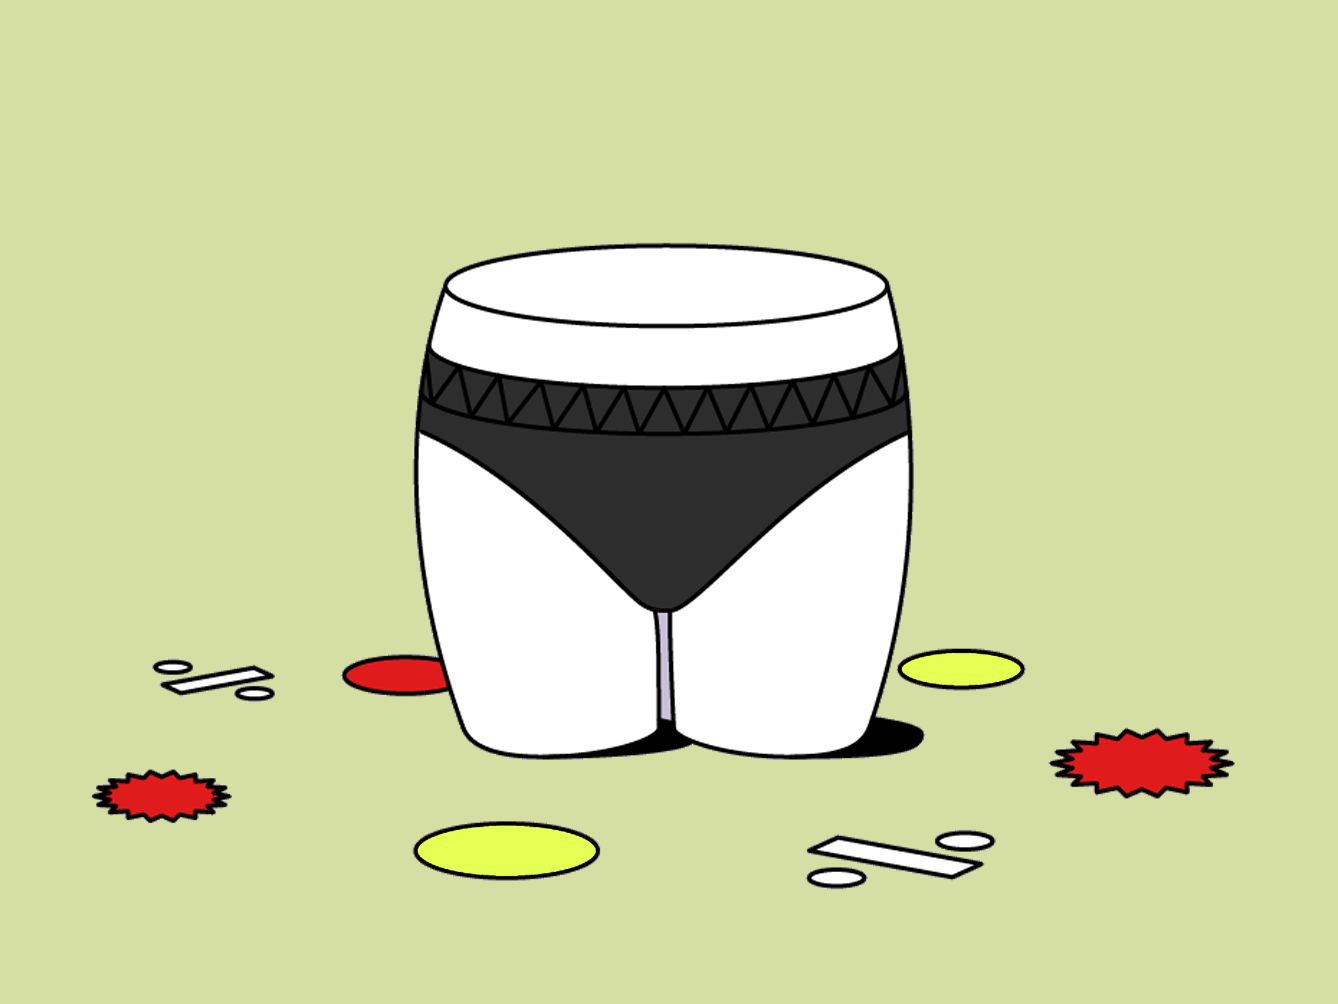 THINX Boyshort Period Underwear for Women FSA HSA Approved